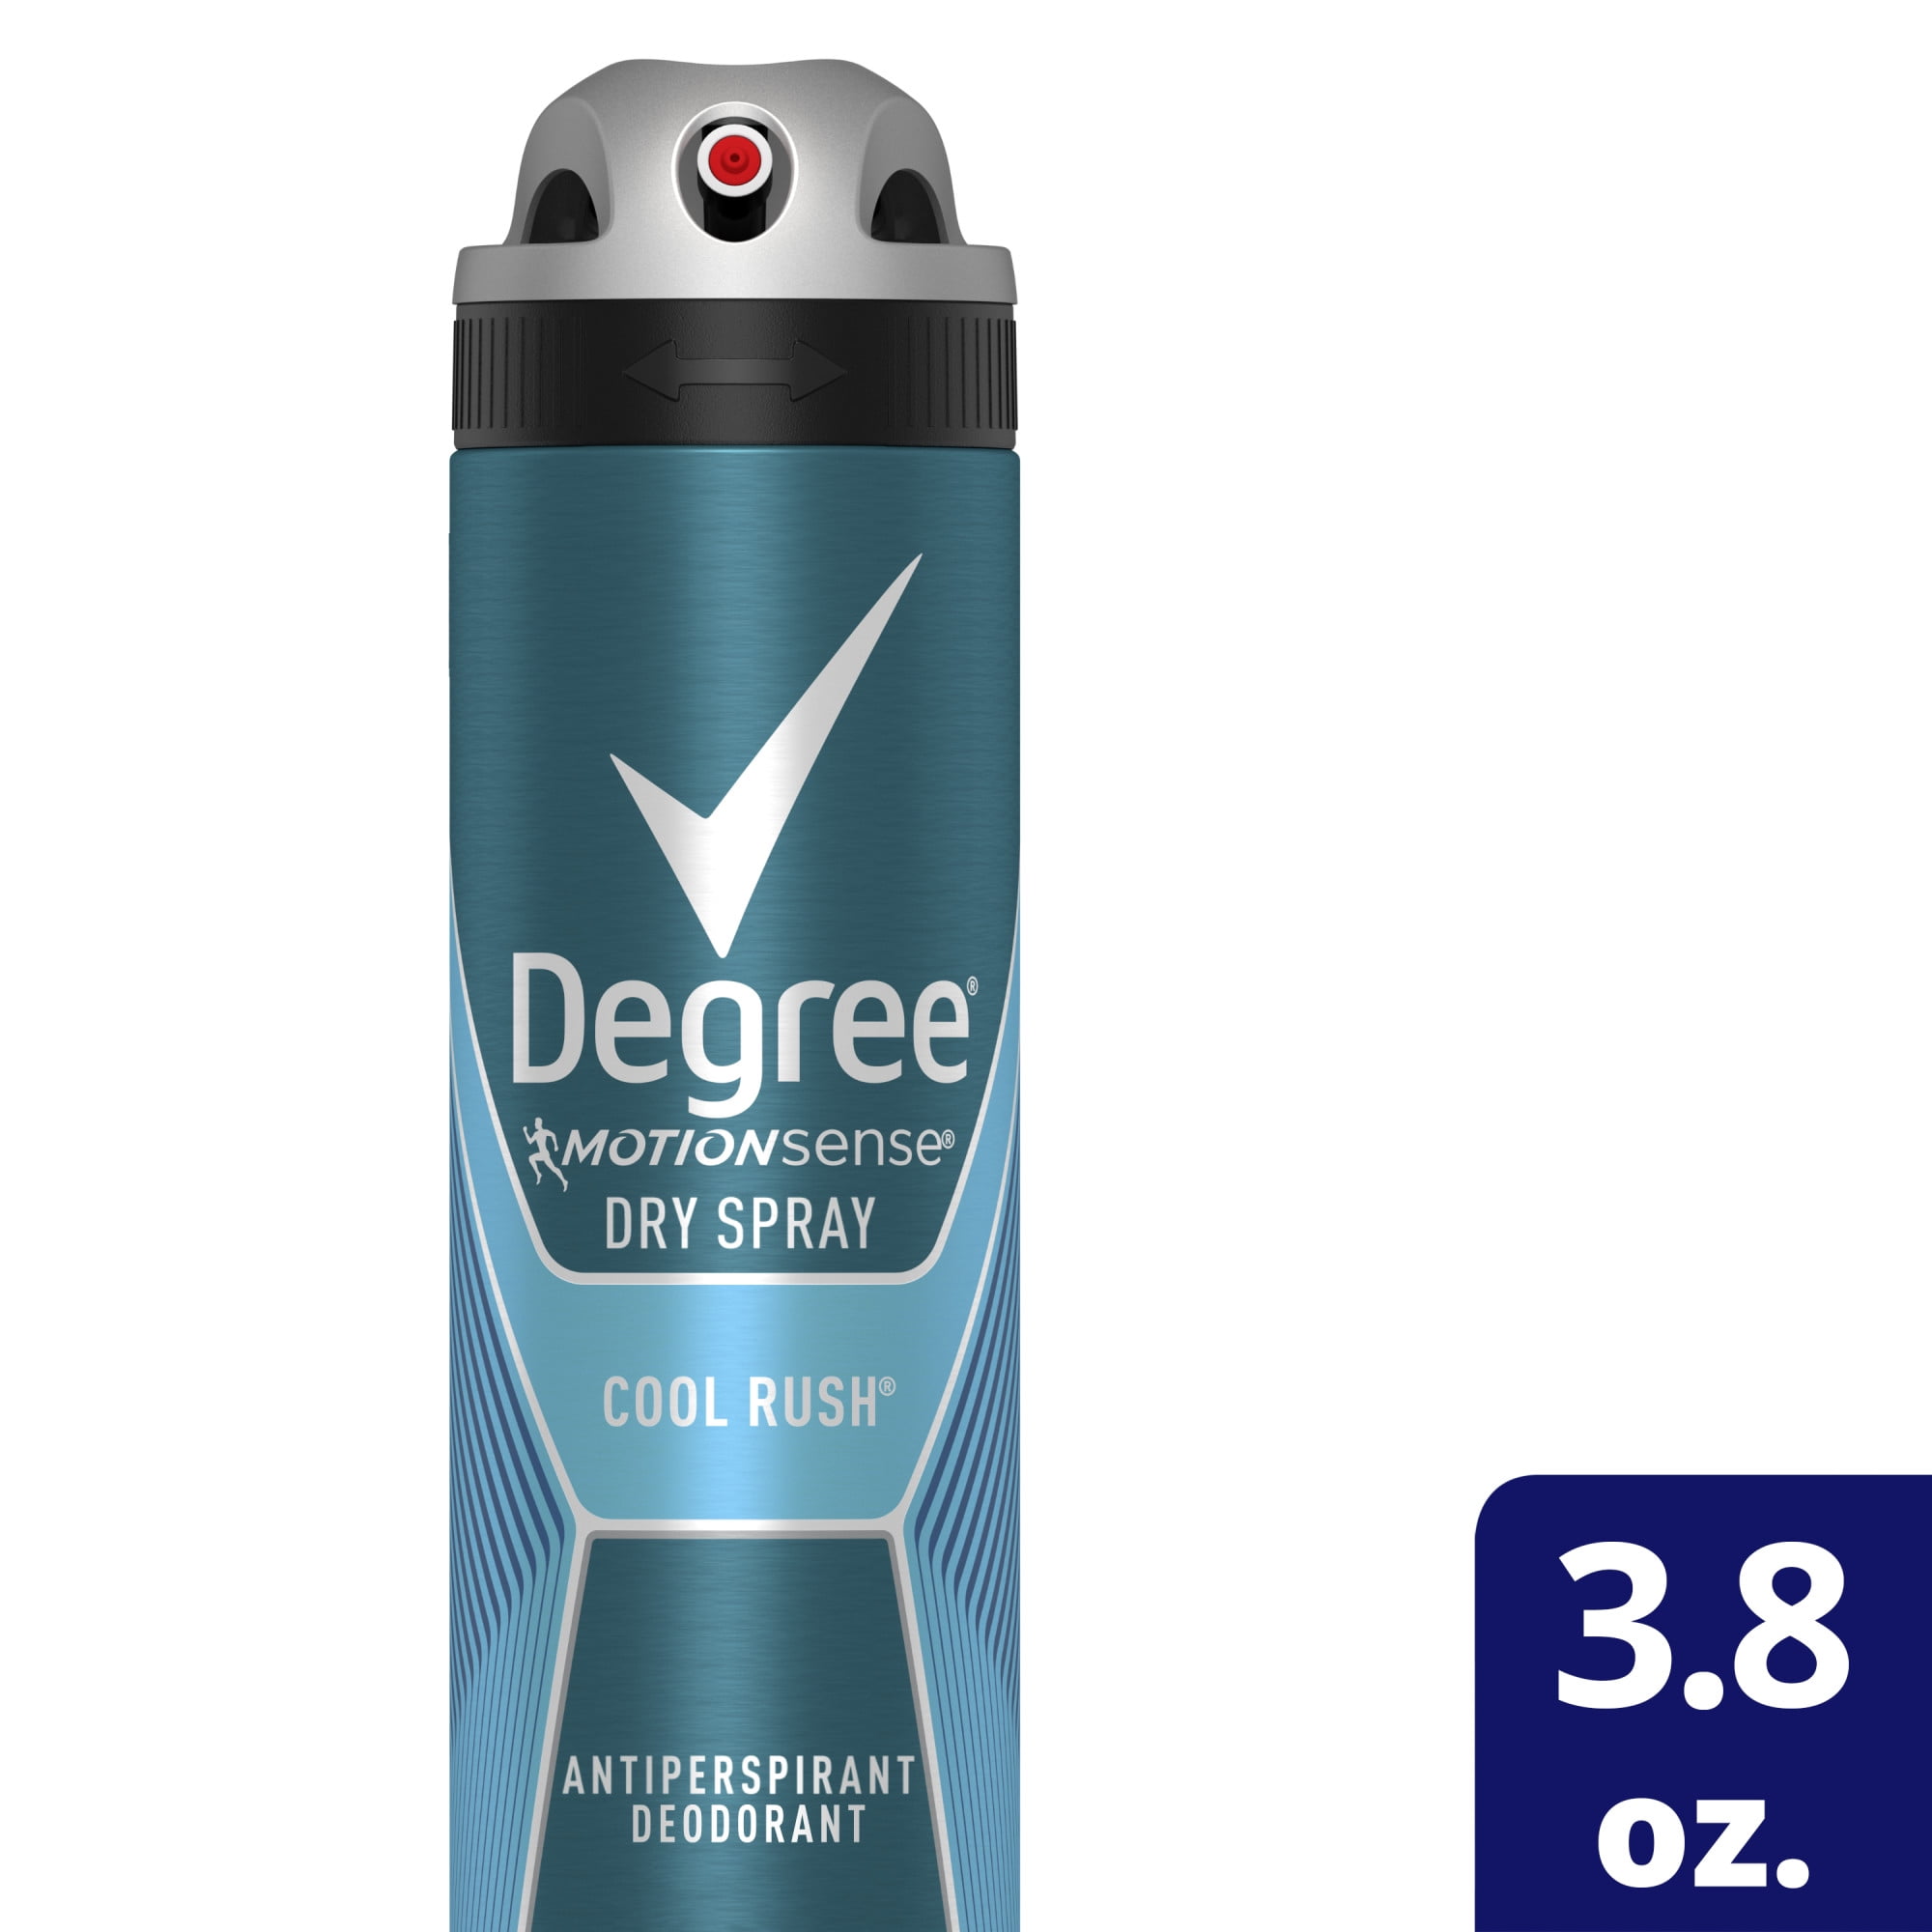 Degree Advanced Long Lasting Men's Antiperspirant Deodorant Dry Spray, Cool  Rush, 3.8 oz